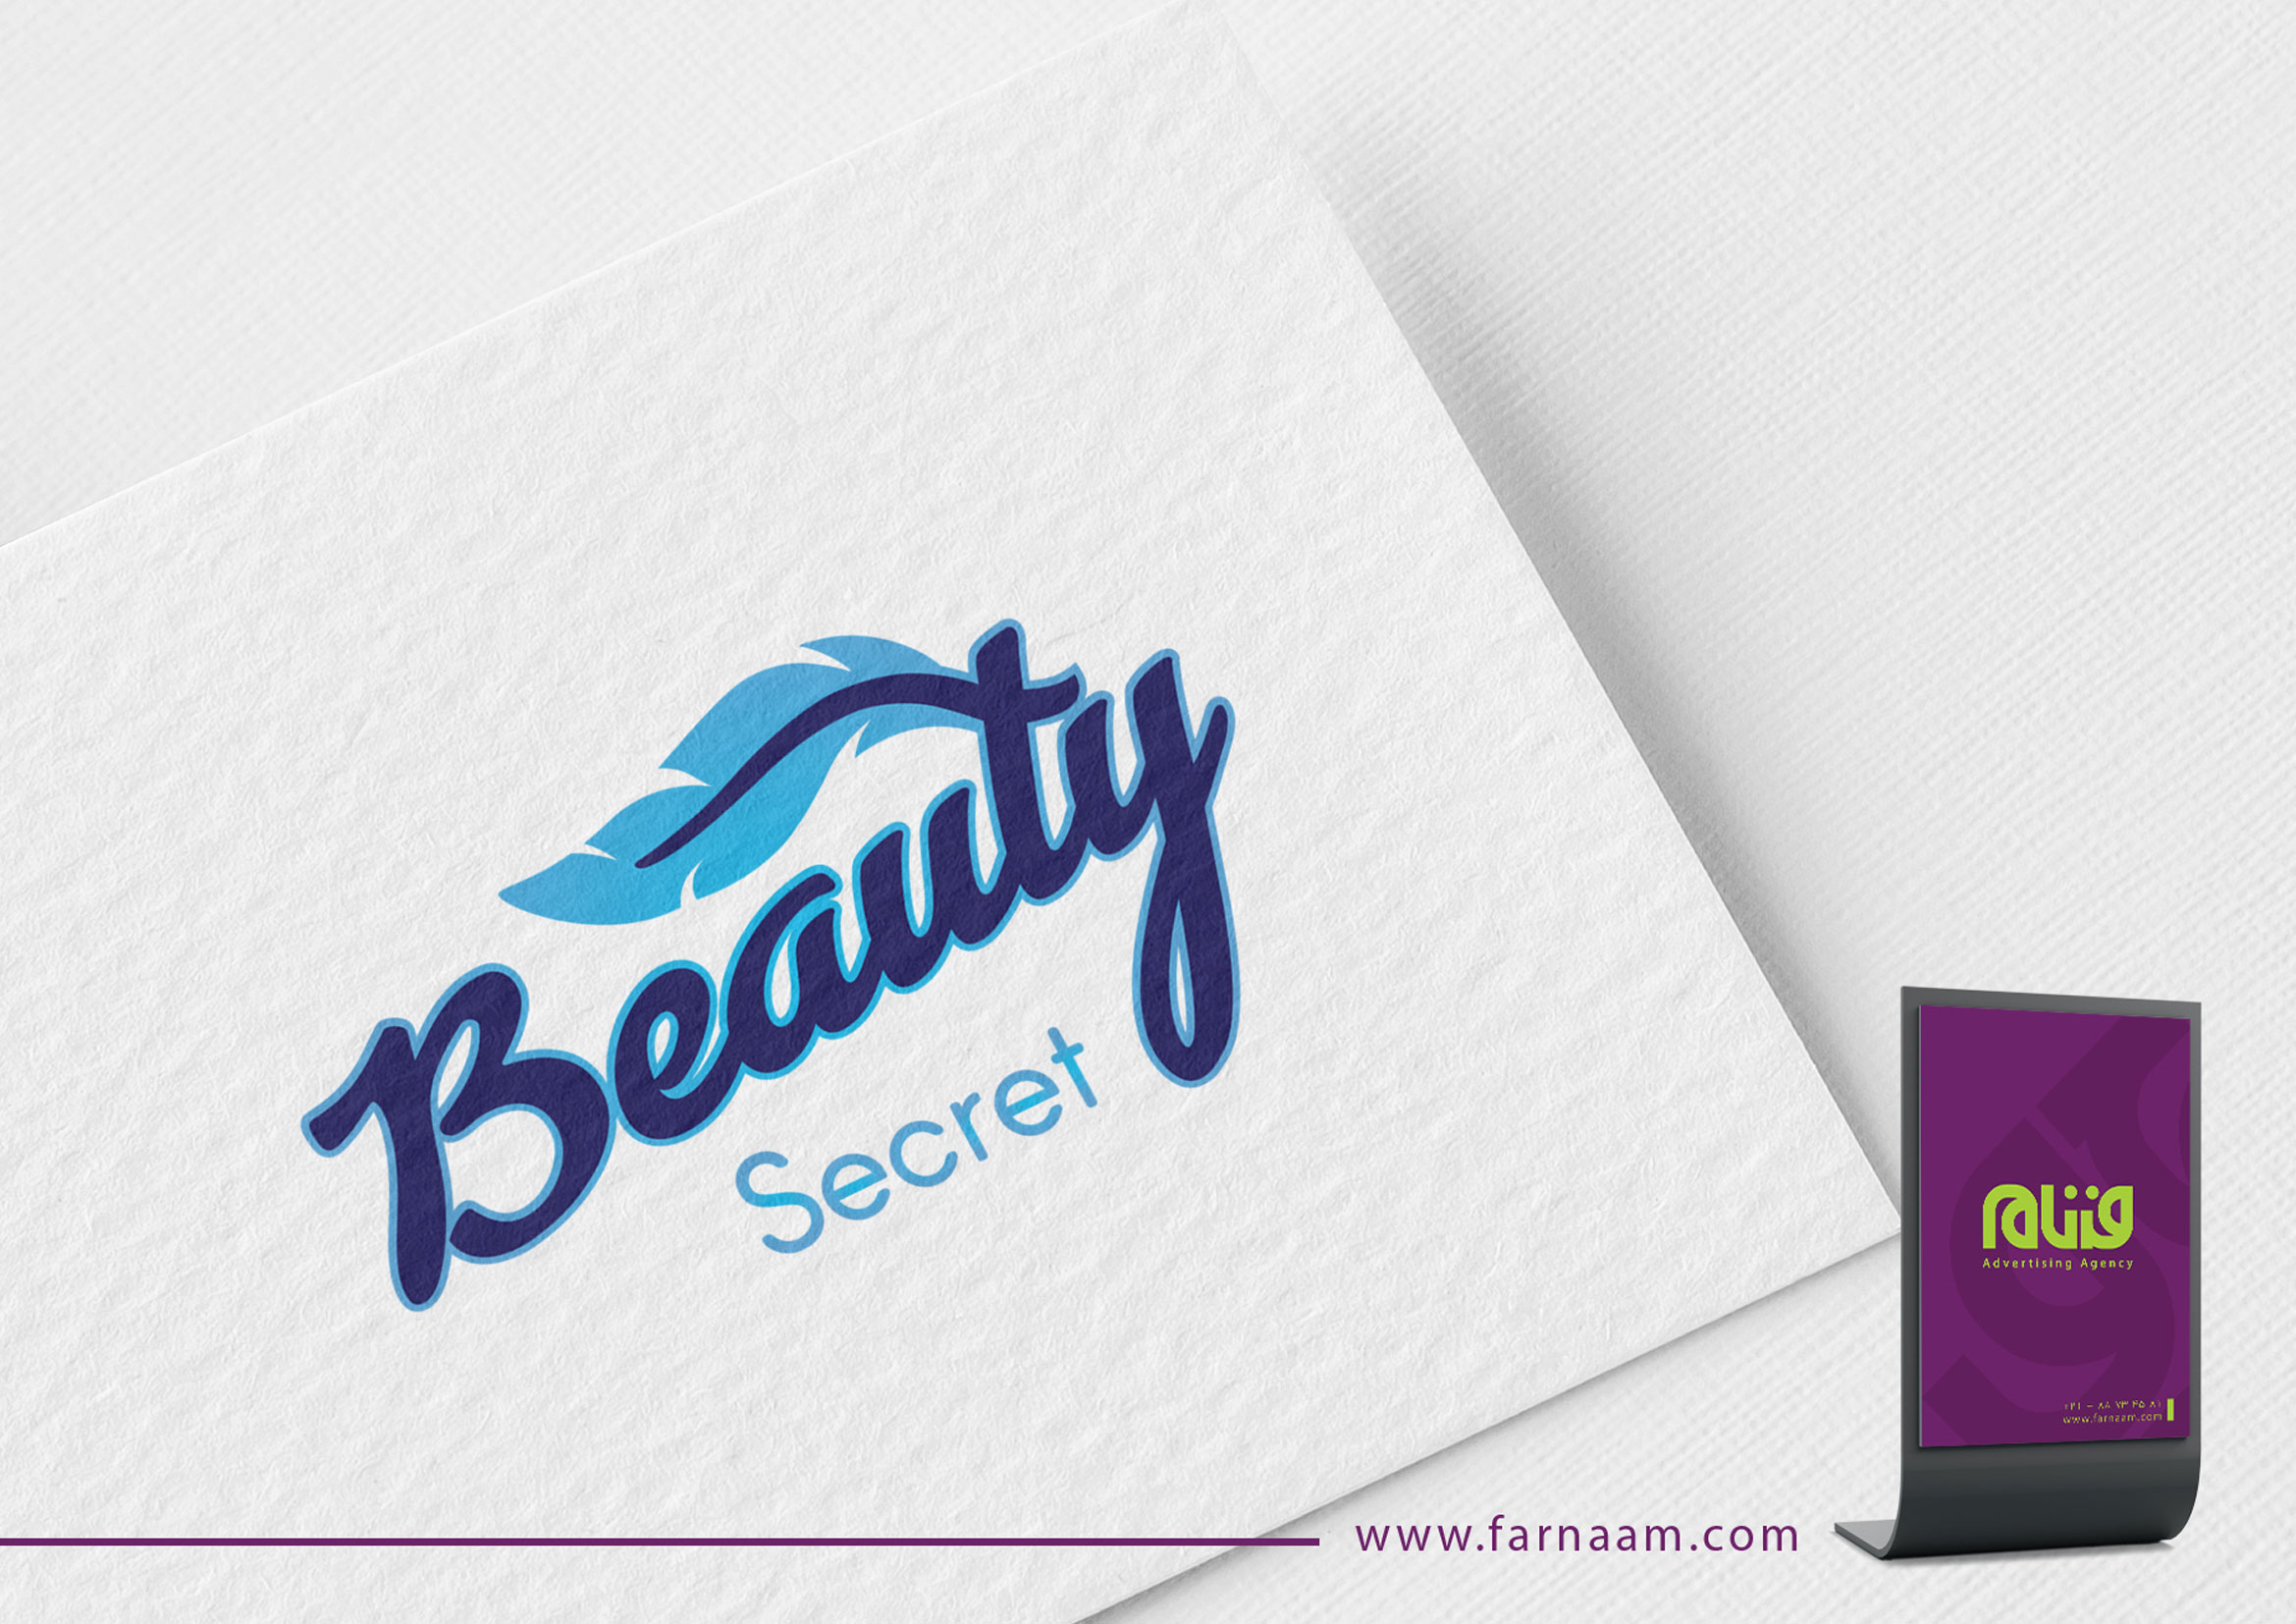 Beauty secre